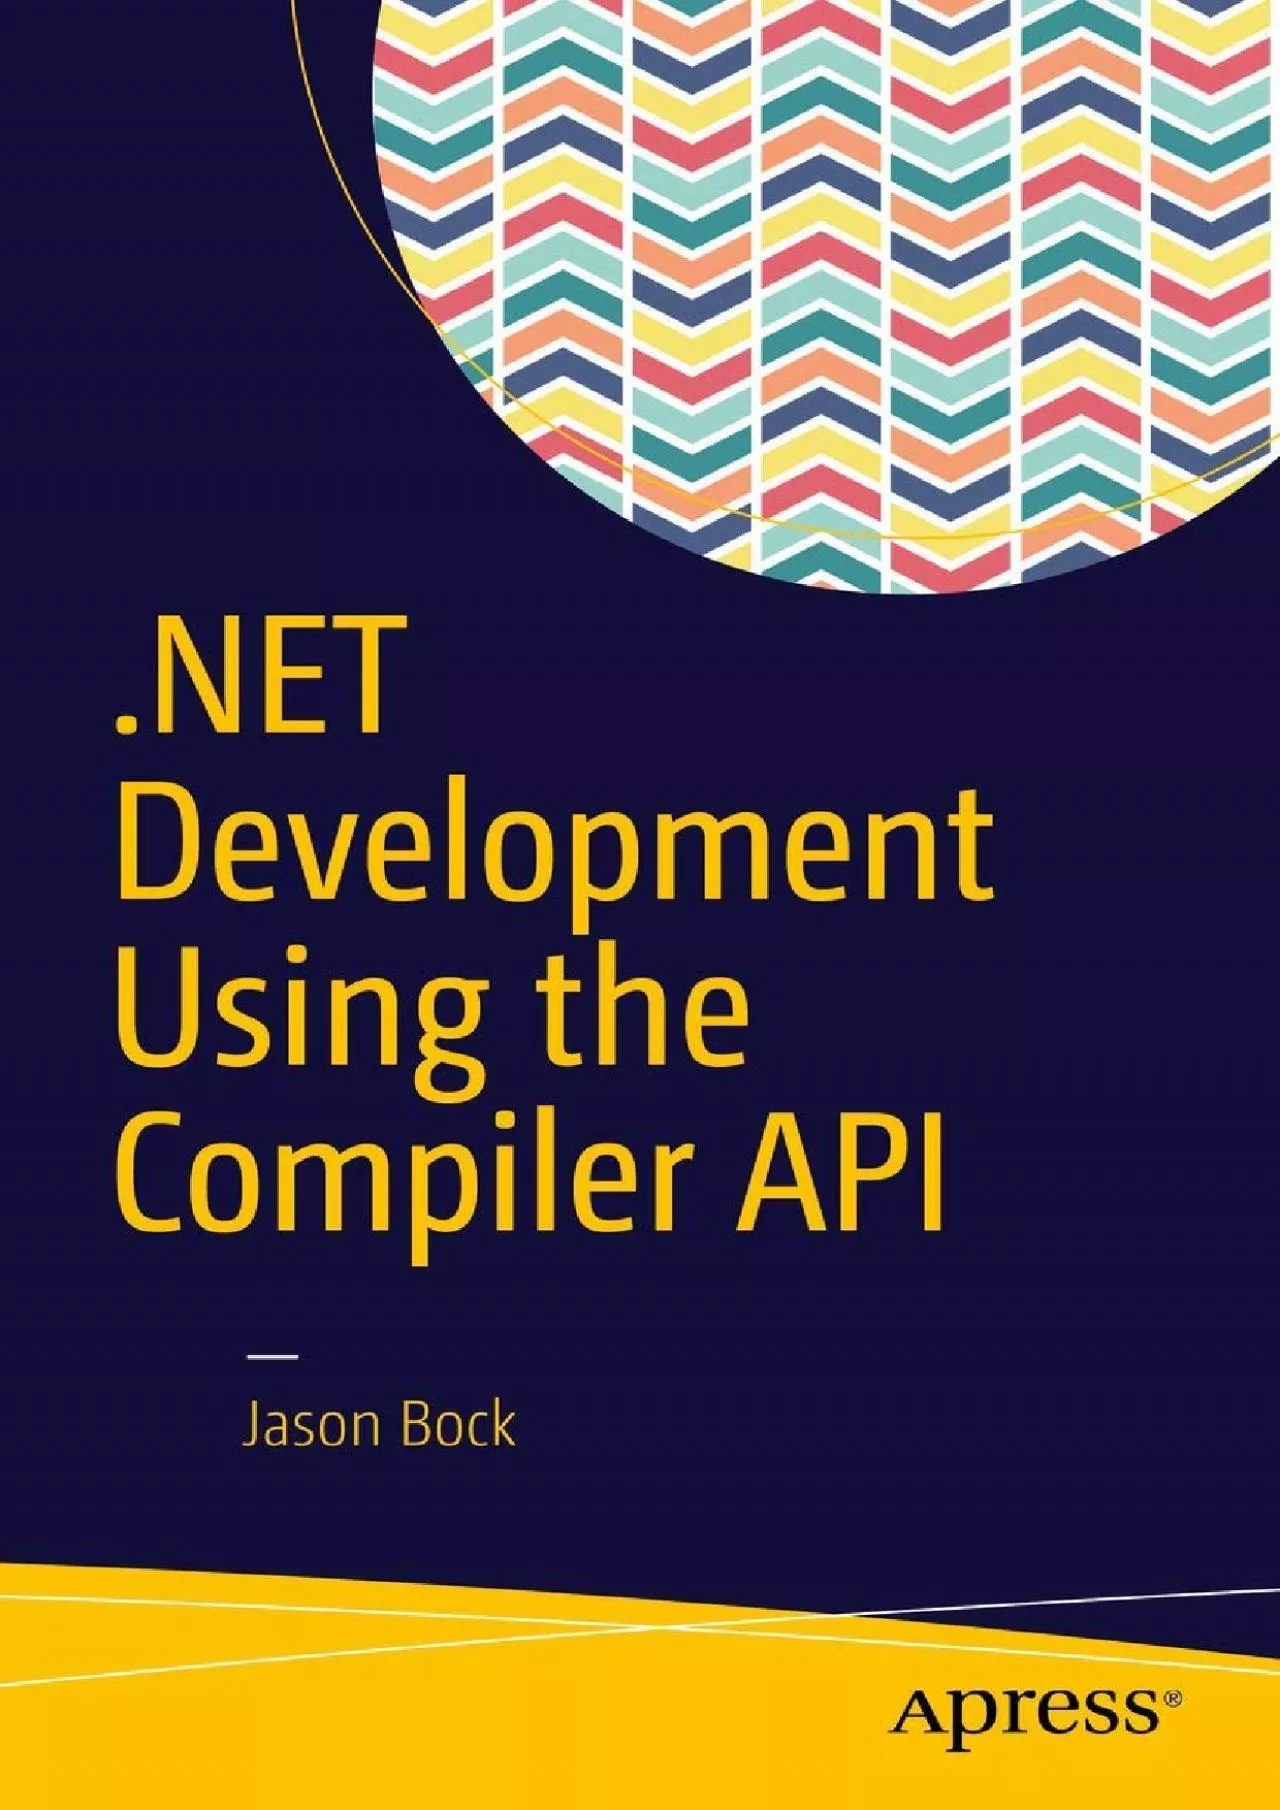 [BEST]-.NET Development Using the Compiler API